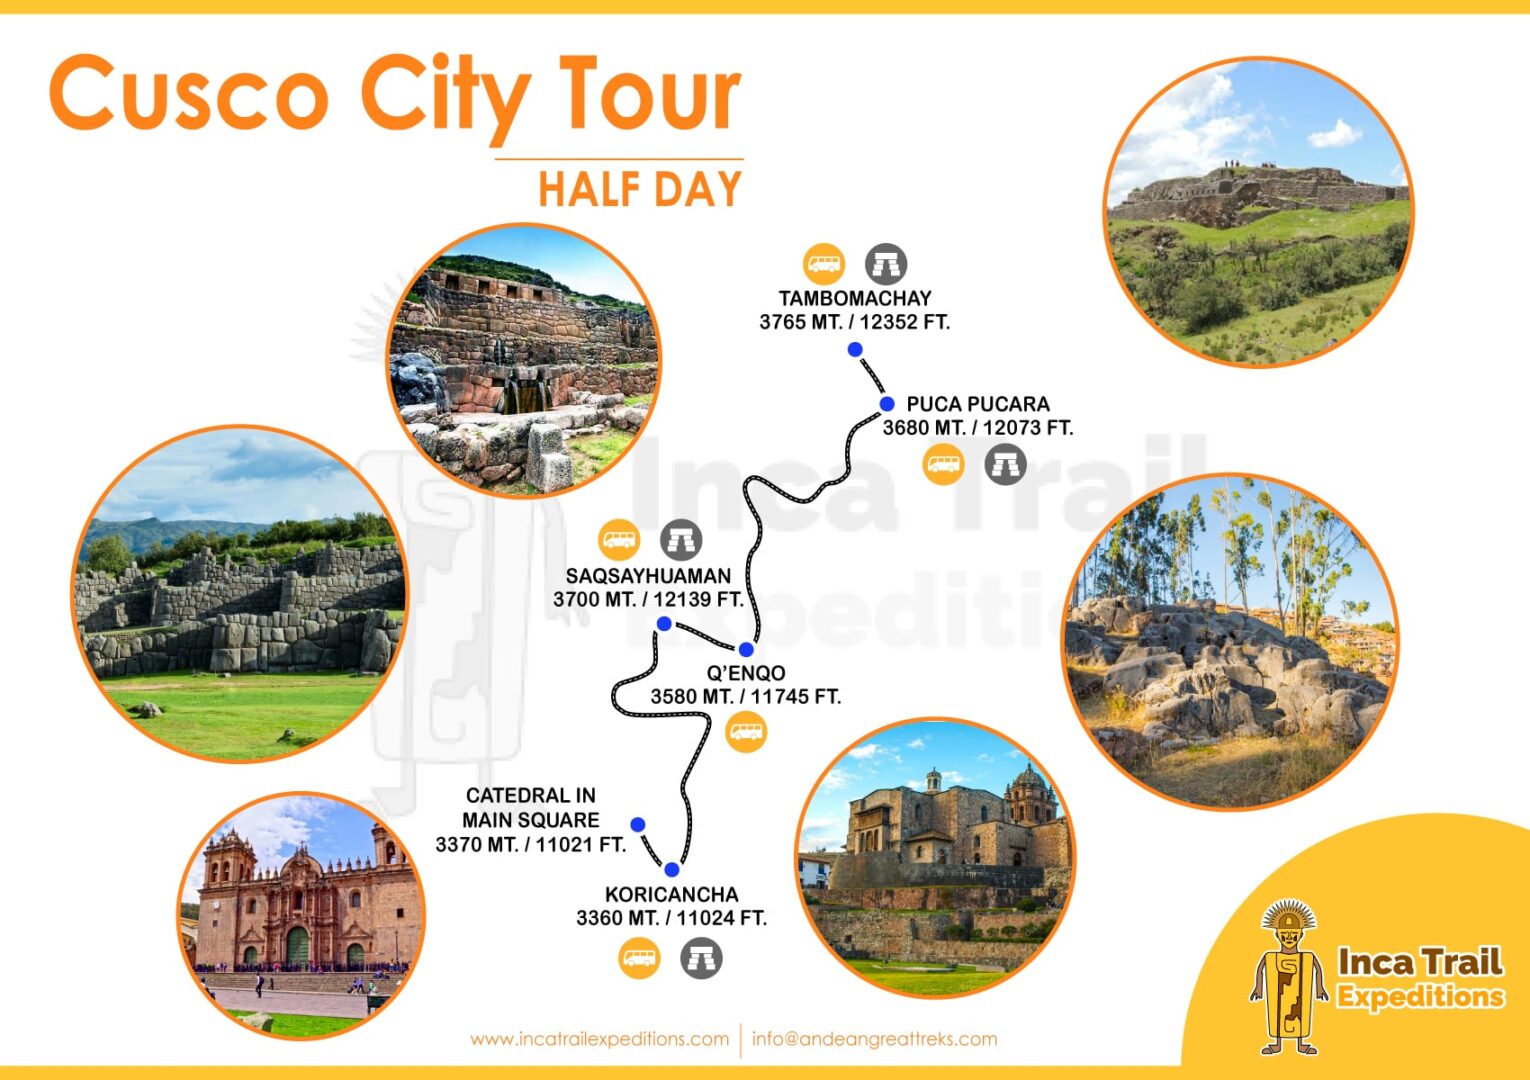 Cusco City Tour half day